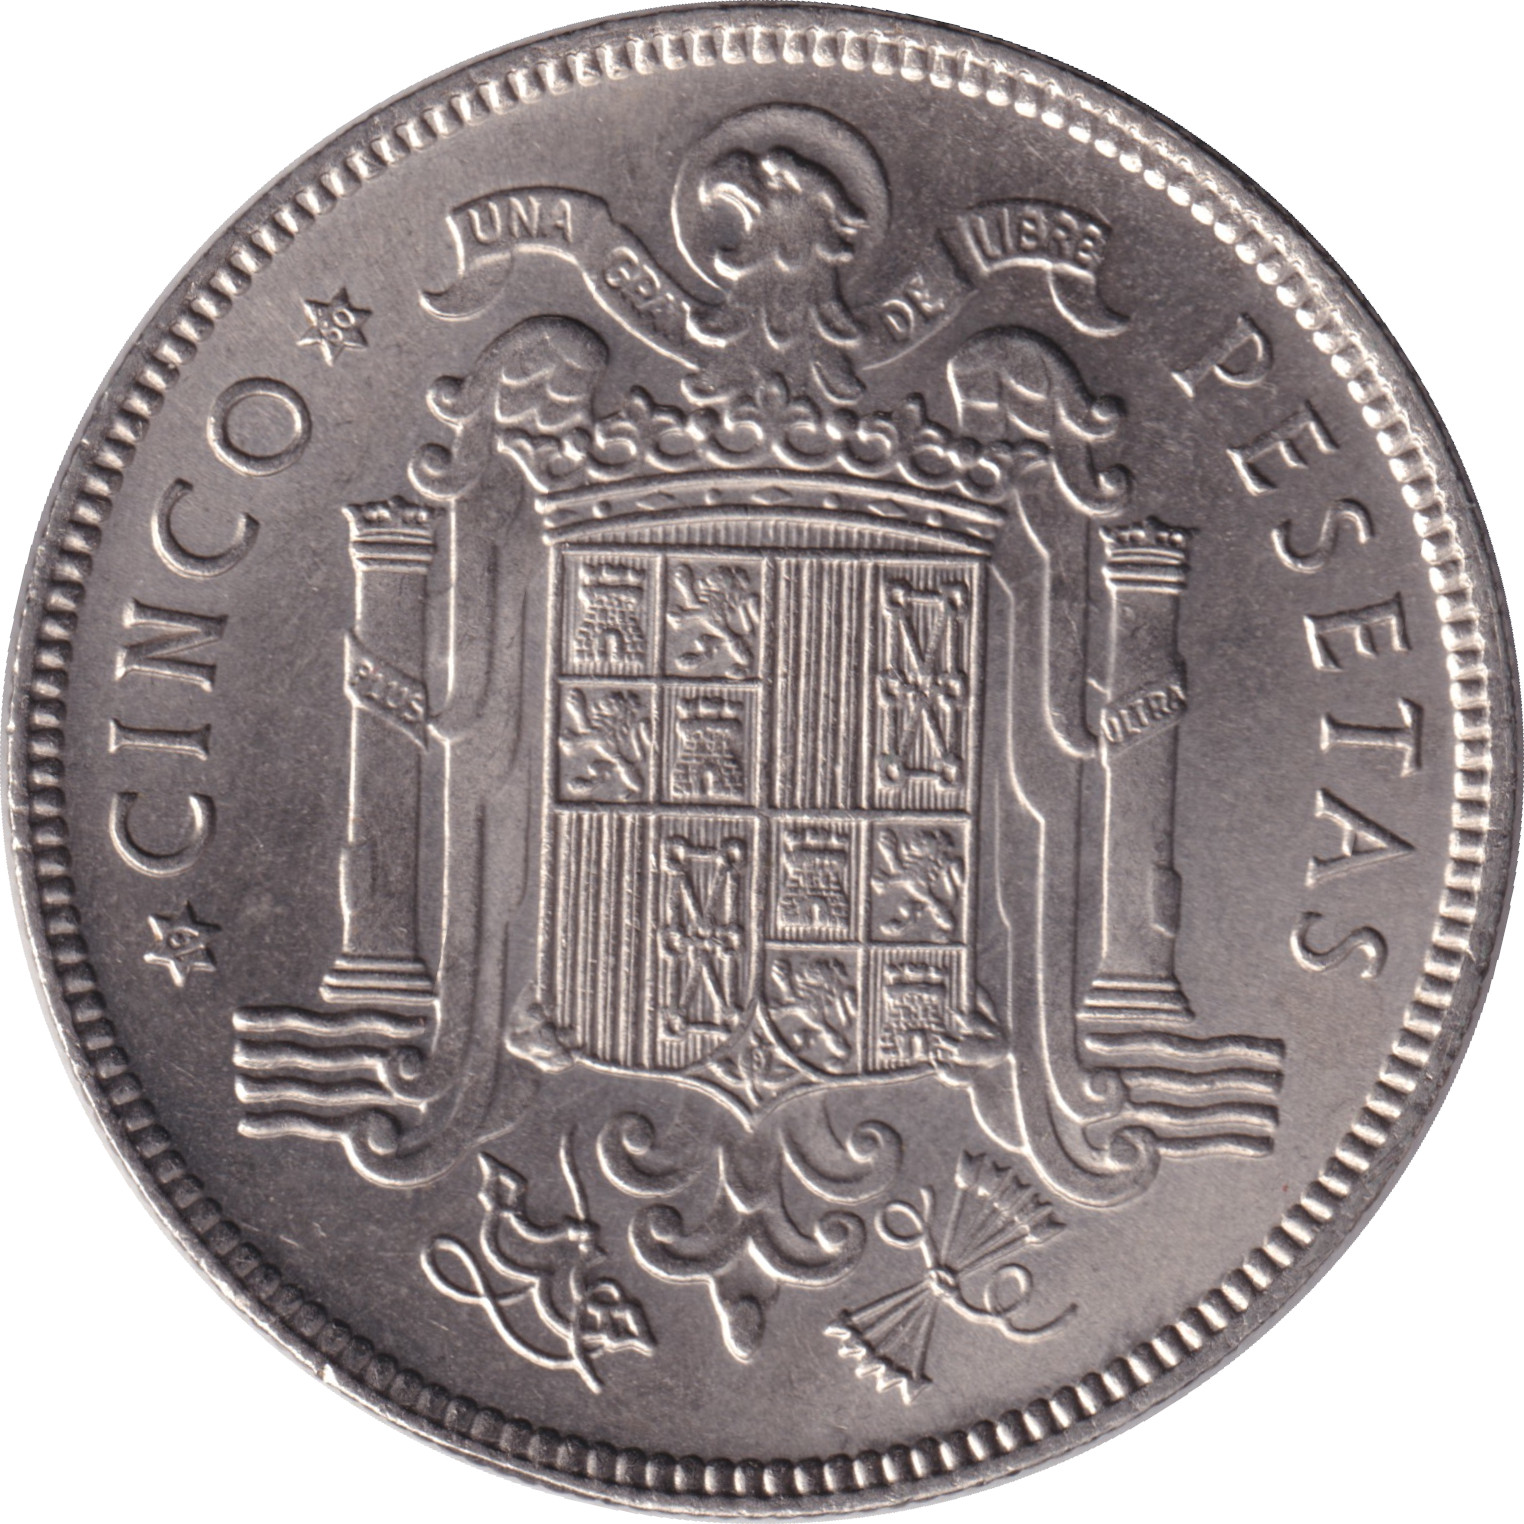 5 pesetas - Franco - Armoiries